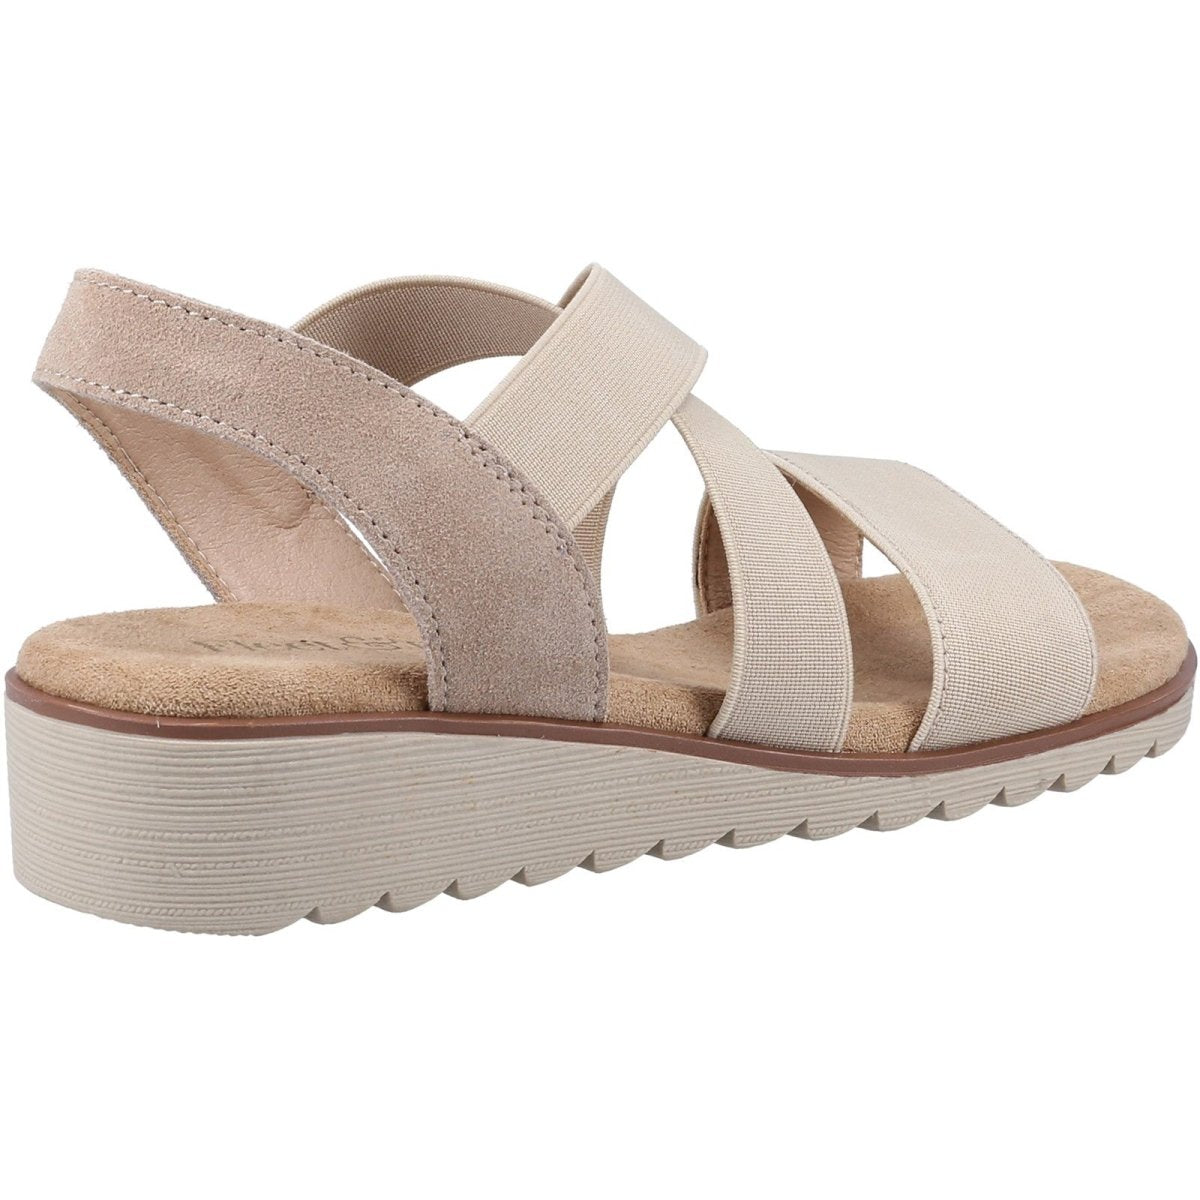 Fleet & Foster Freesia Ladies Open-Toe Summer Sandals - Shoe Store Direct